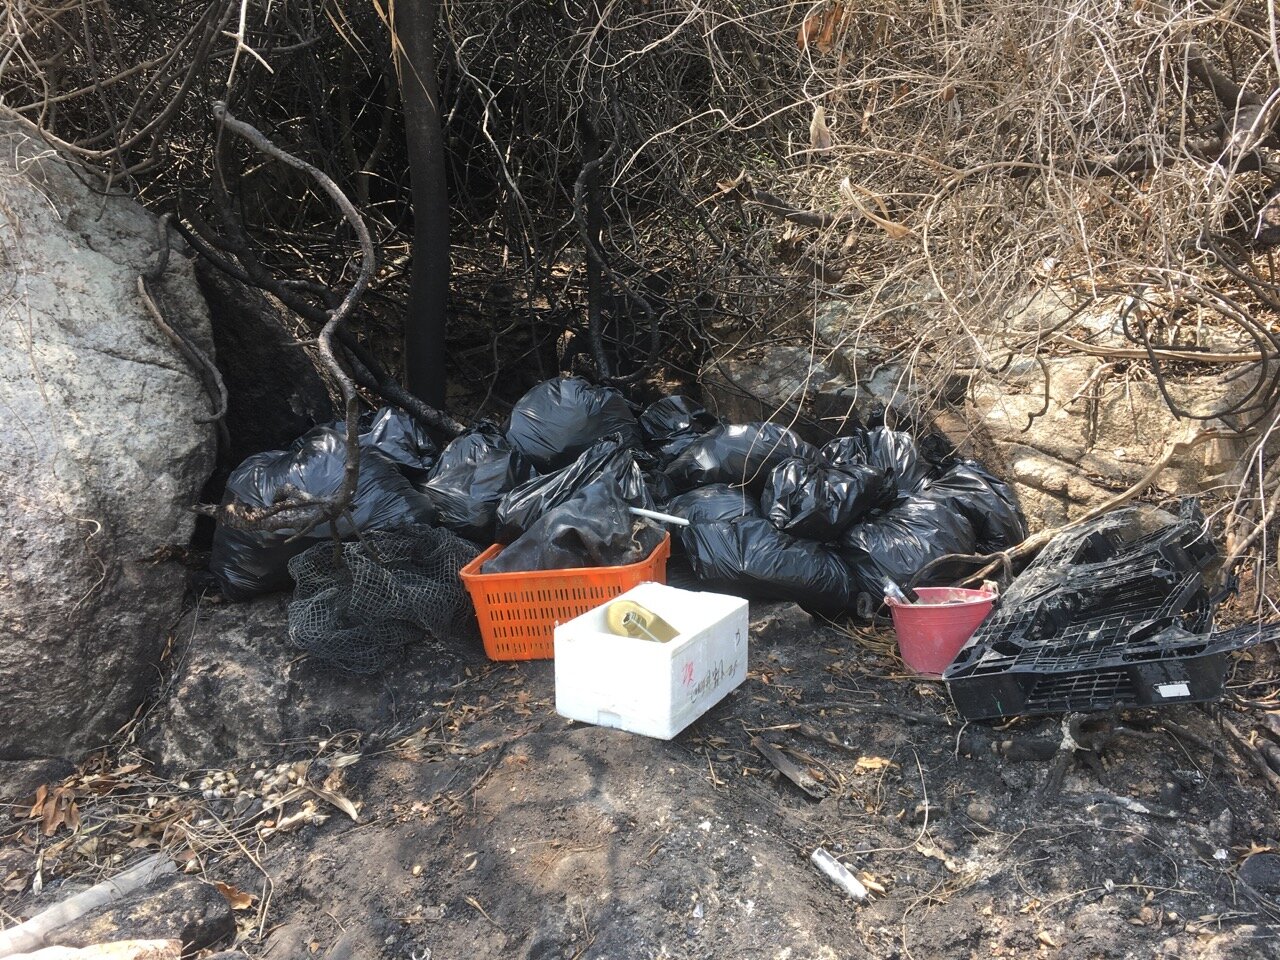 123.5 kg of ocean plastic trash collected